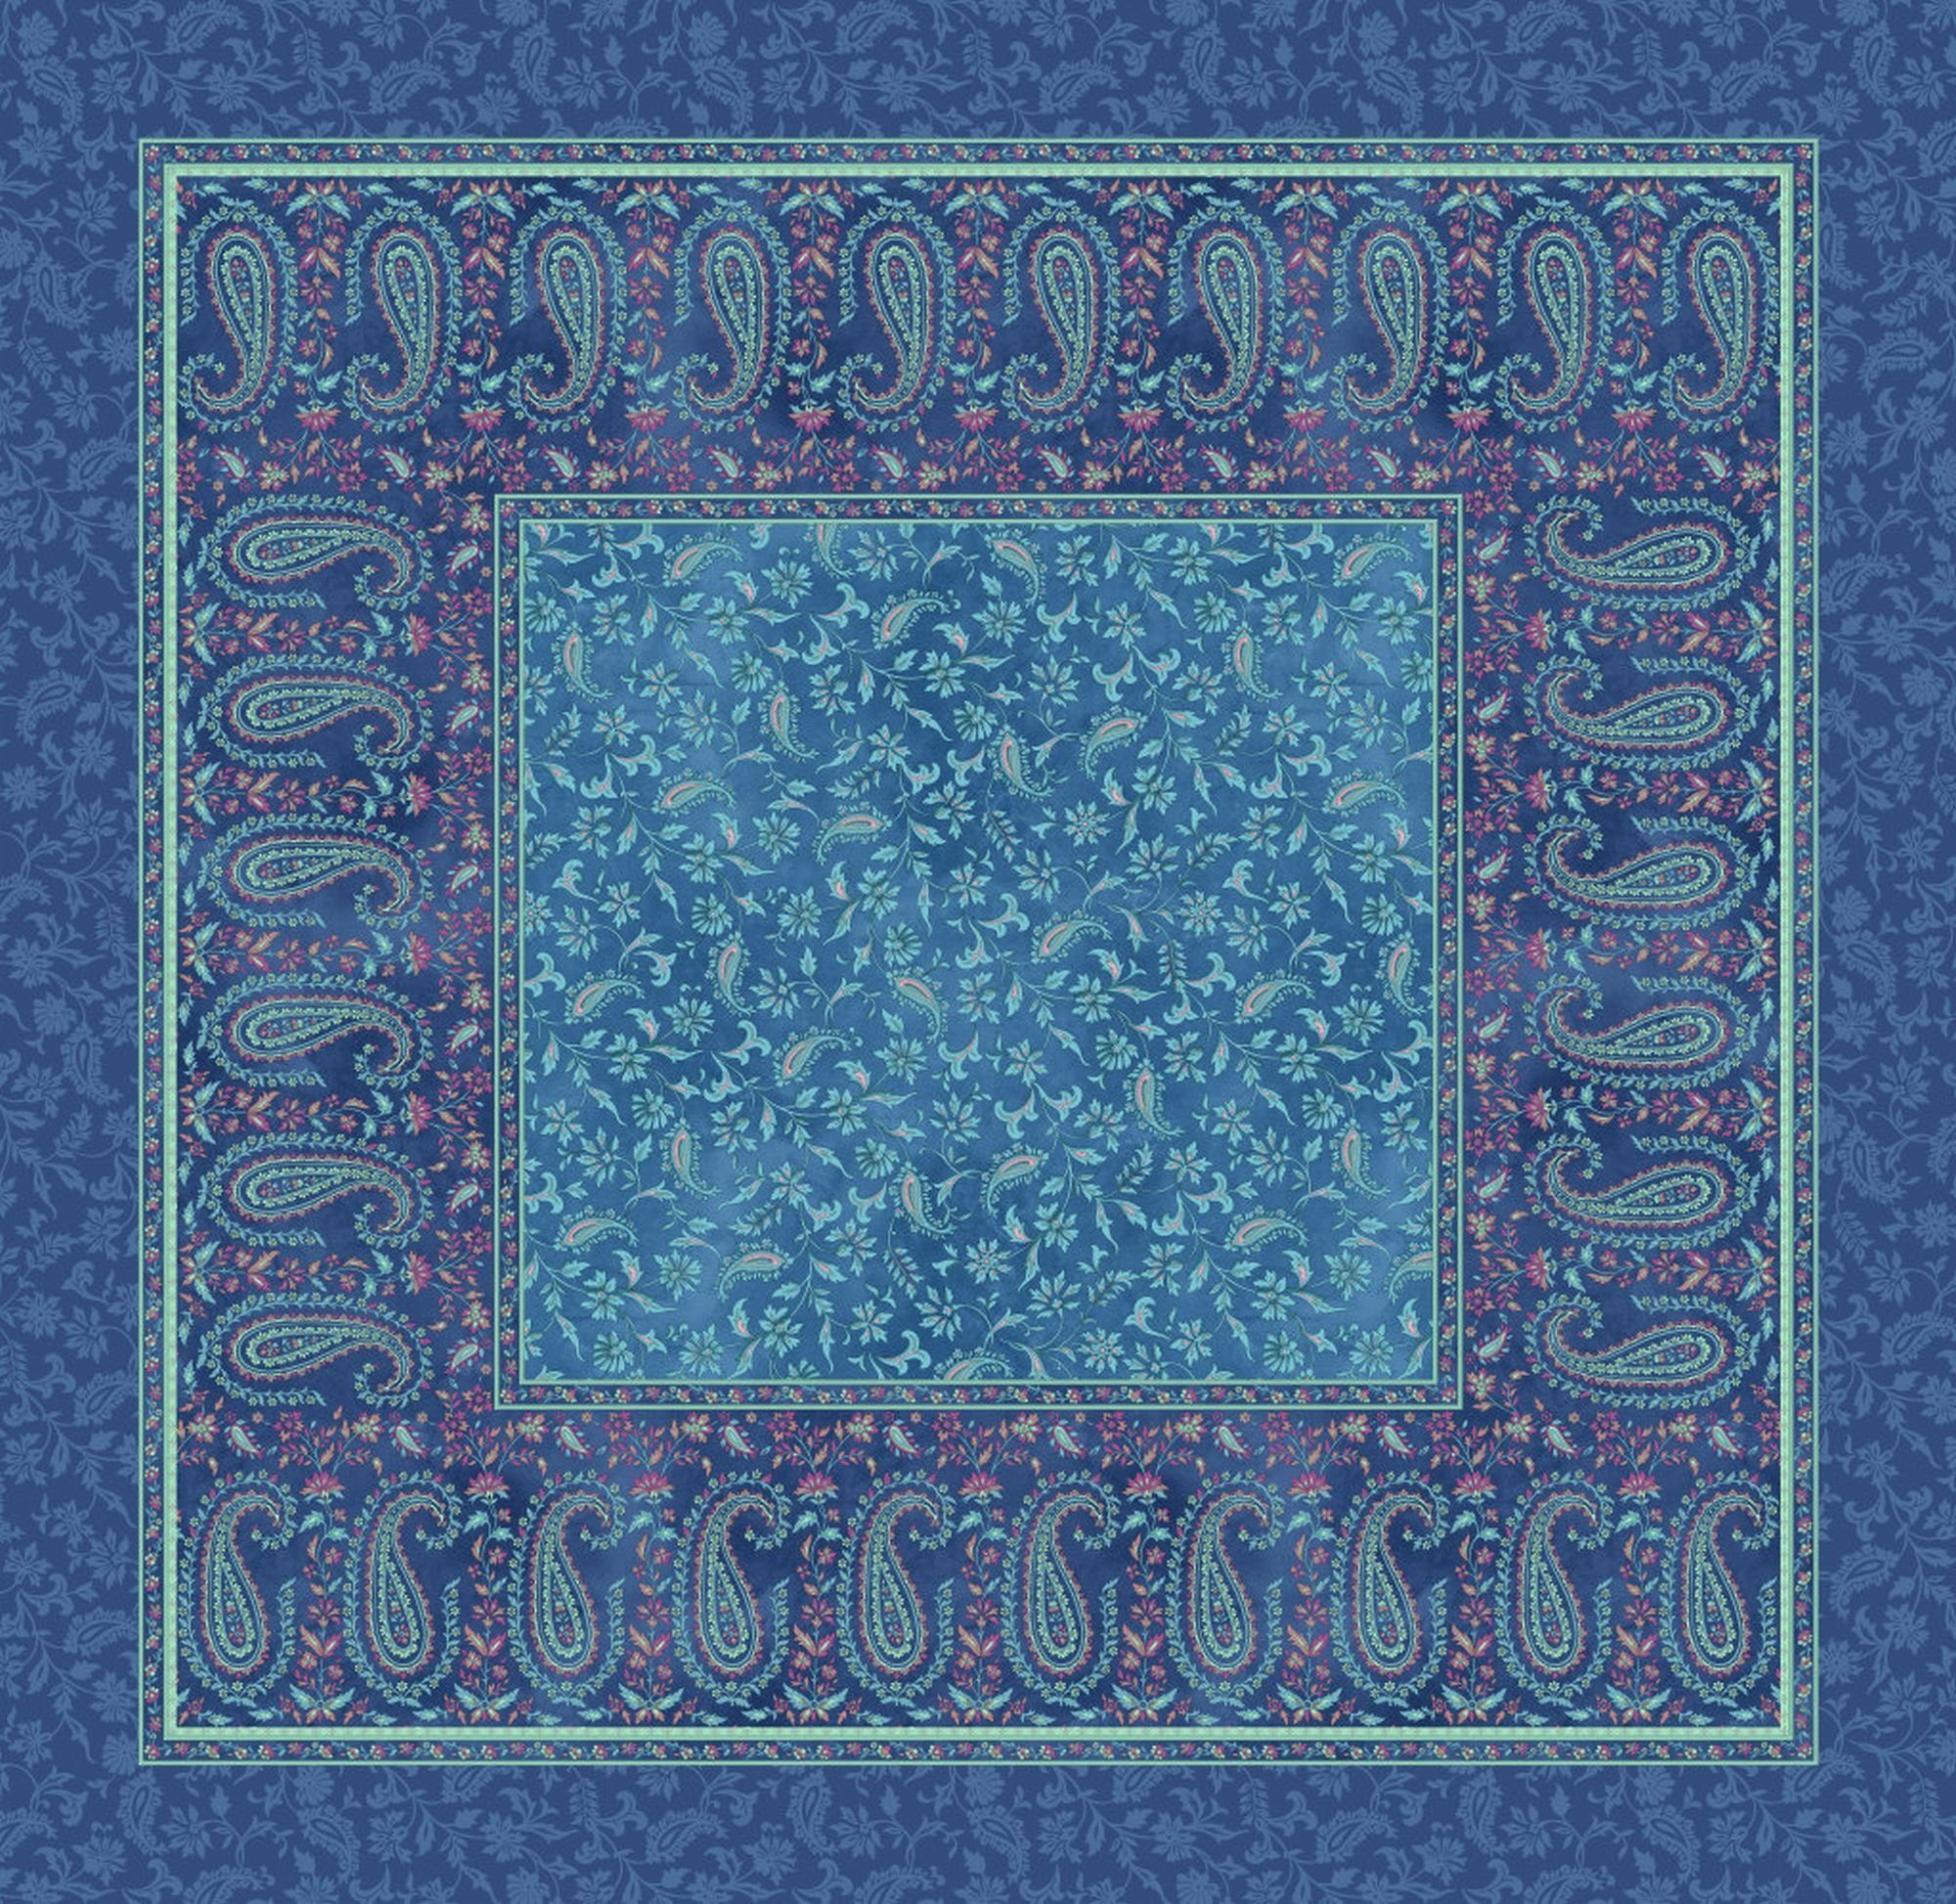 NEU: Bassetti Teppiche, ausdrucksstarke Farbverläufe, 2 Größen - 4 Farben